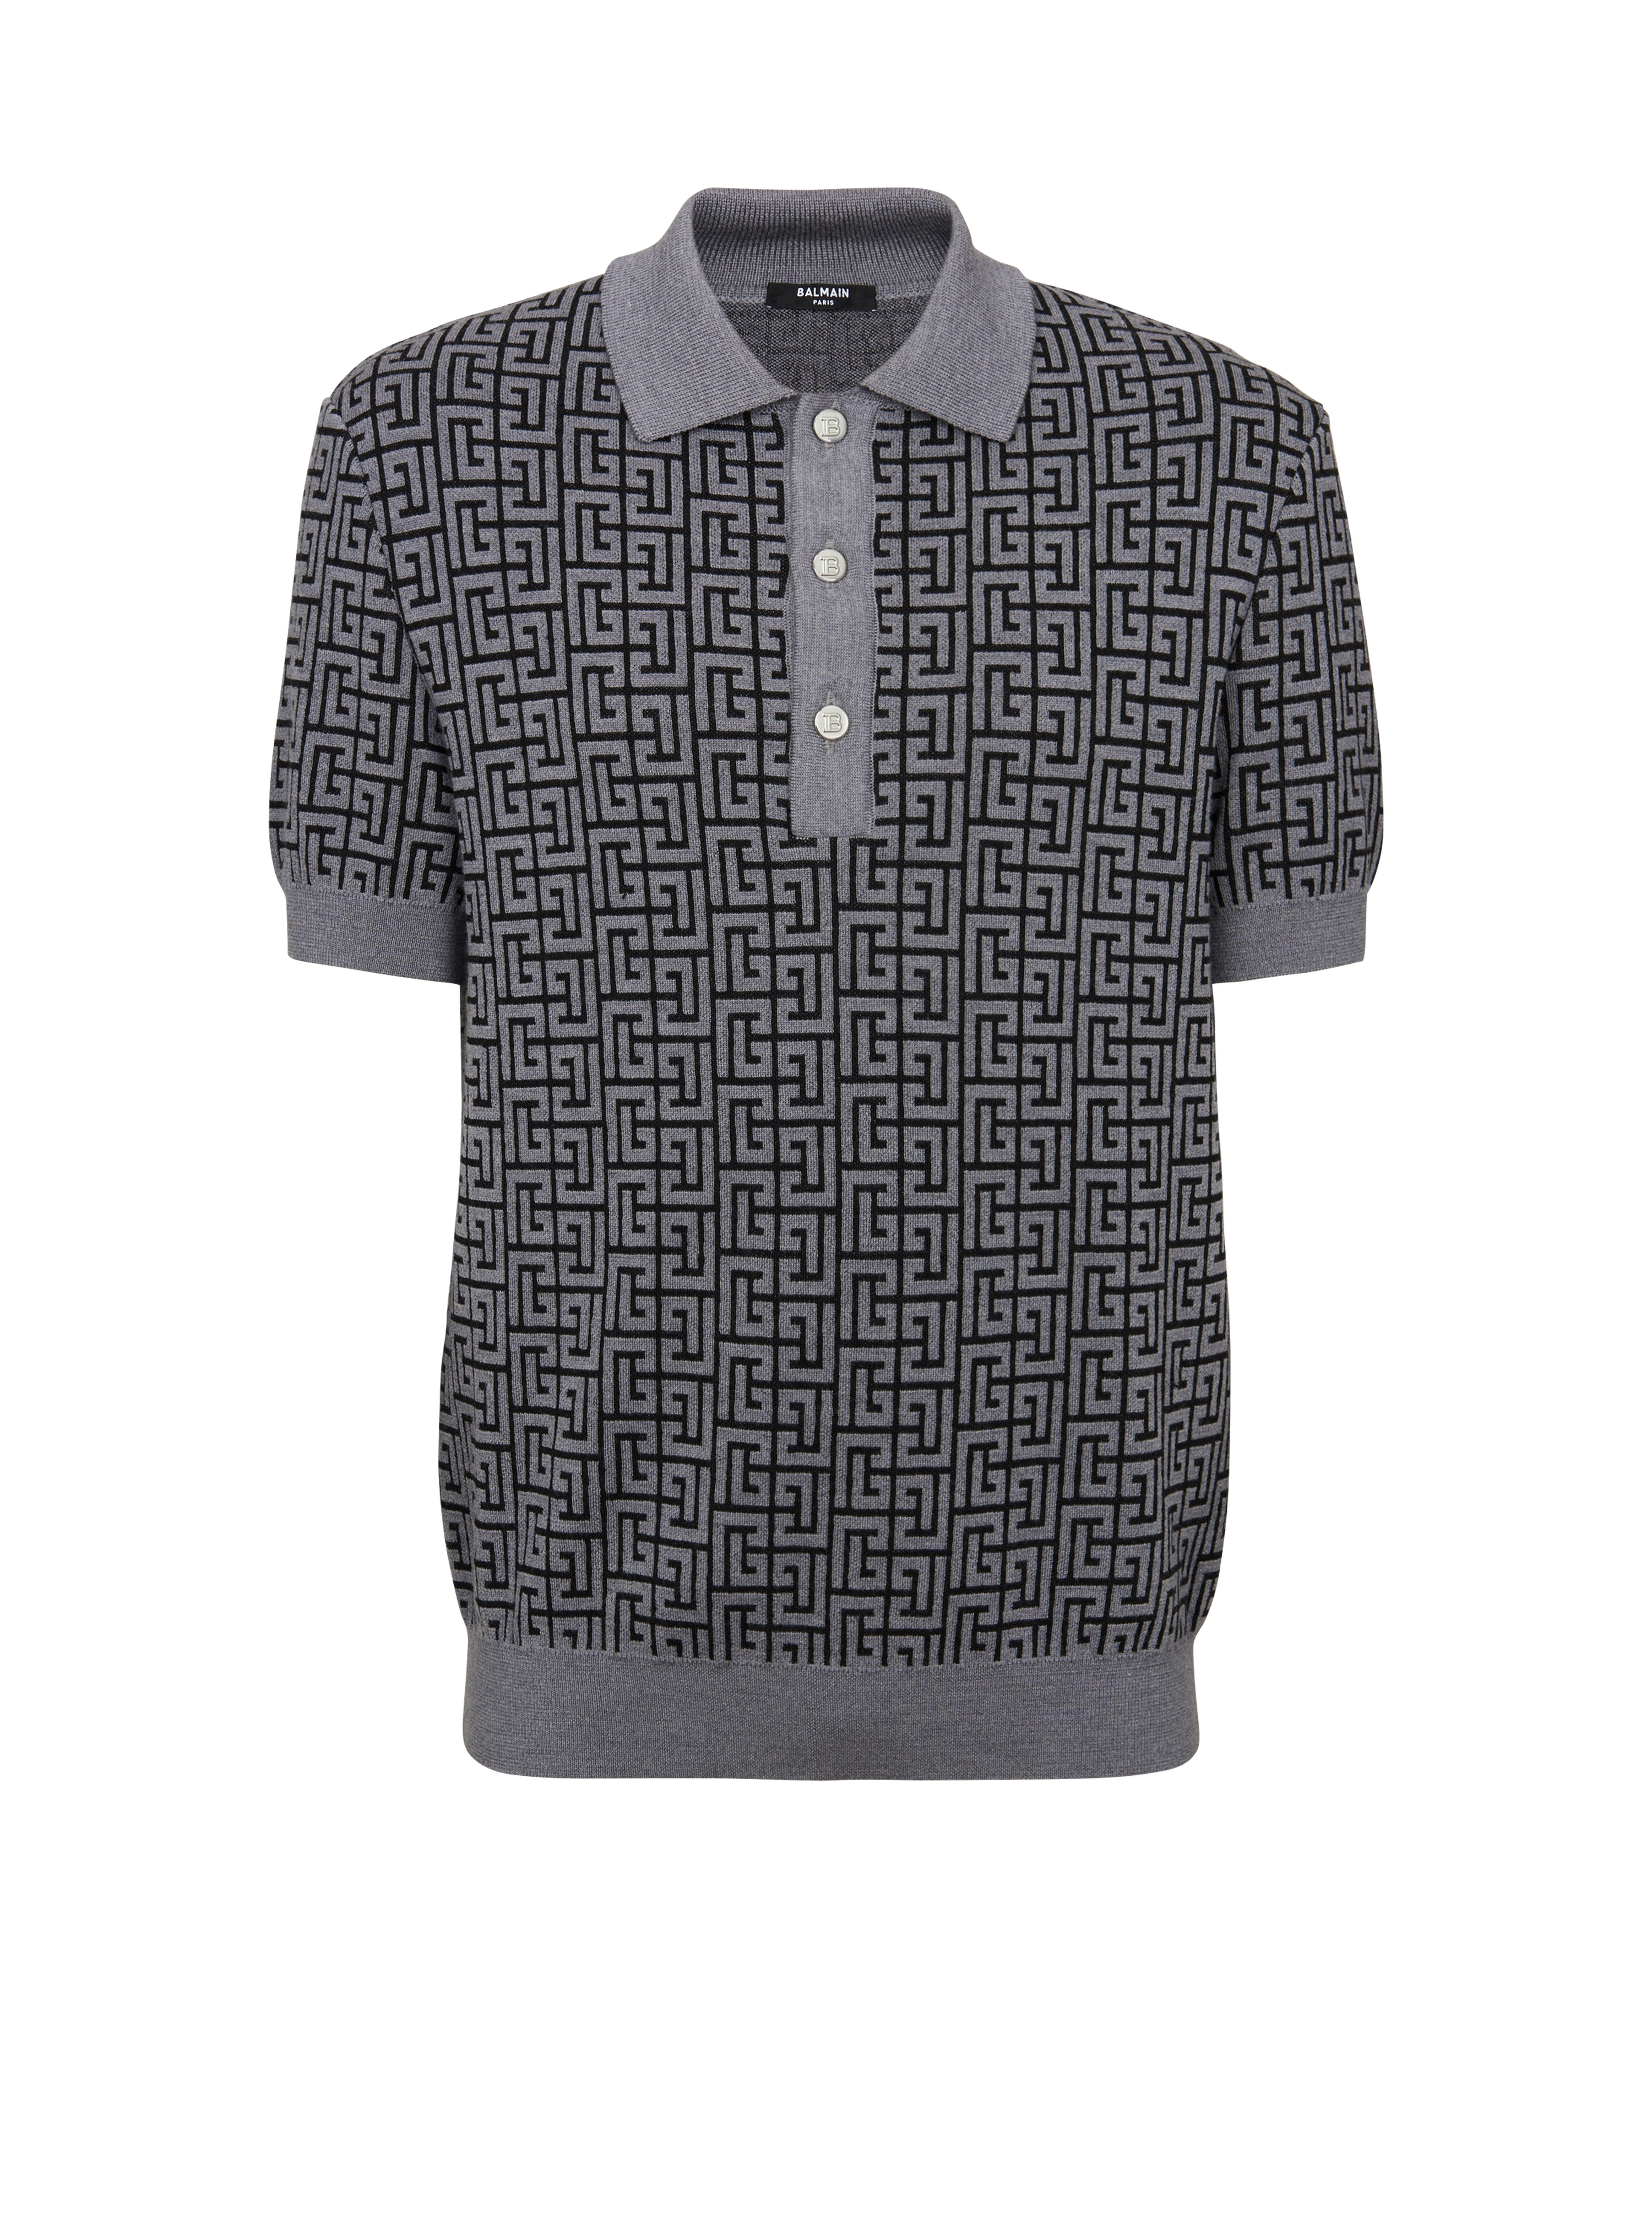 Wool polo shirt with Balmain monogram, grey